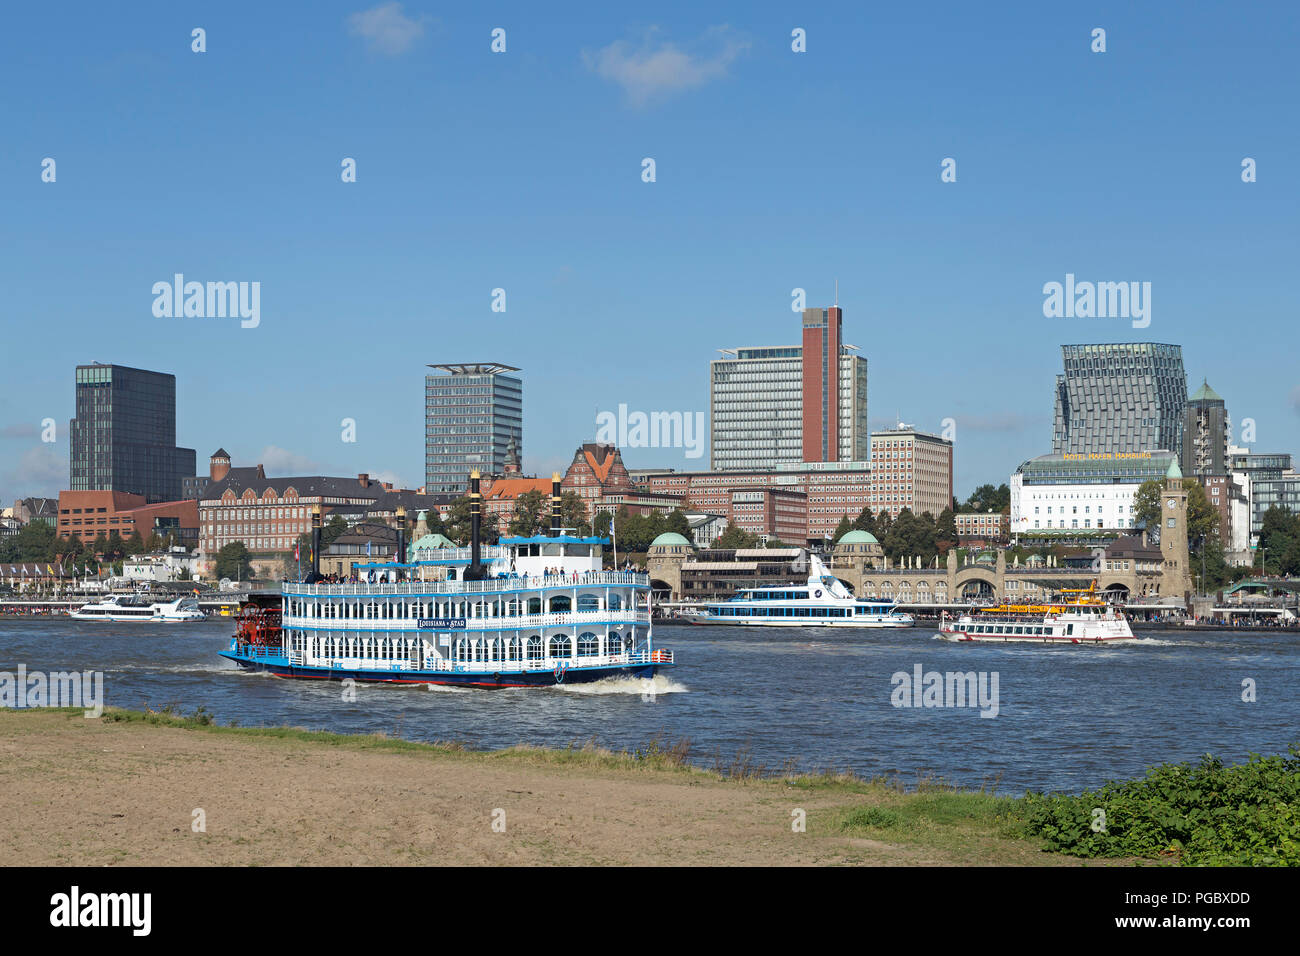 Battello a vapore Louisiana Star, pontili, Amburgo, Germania Foto Stock